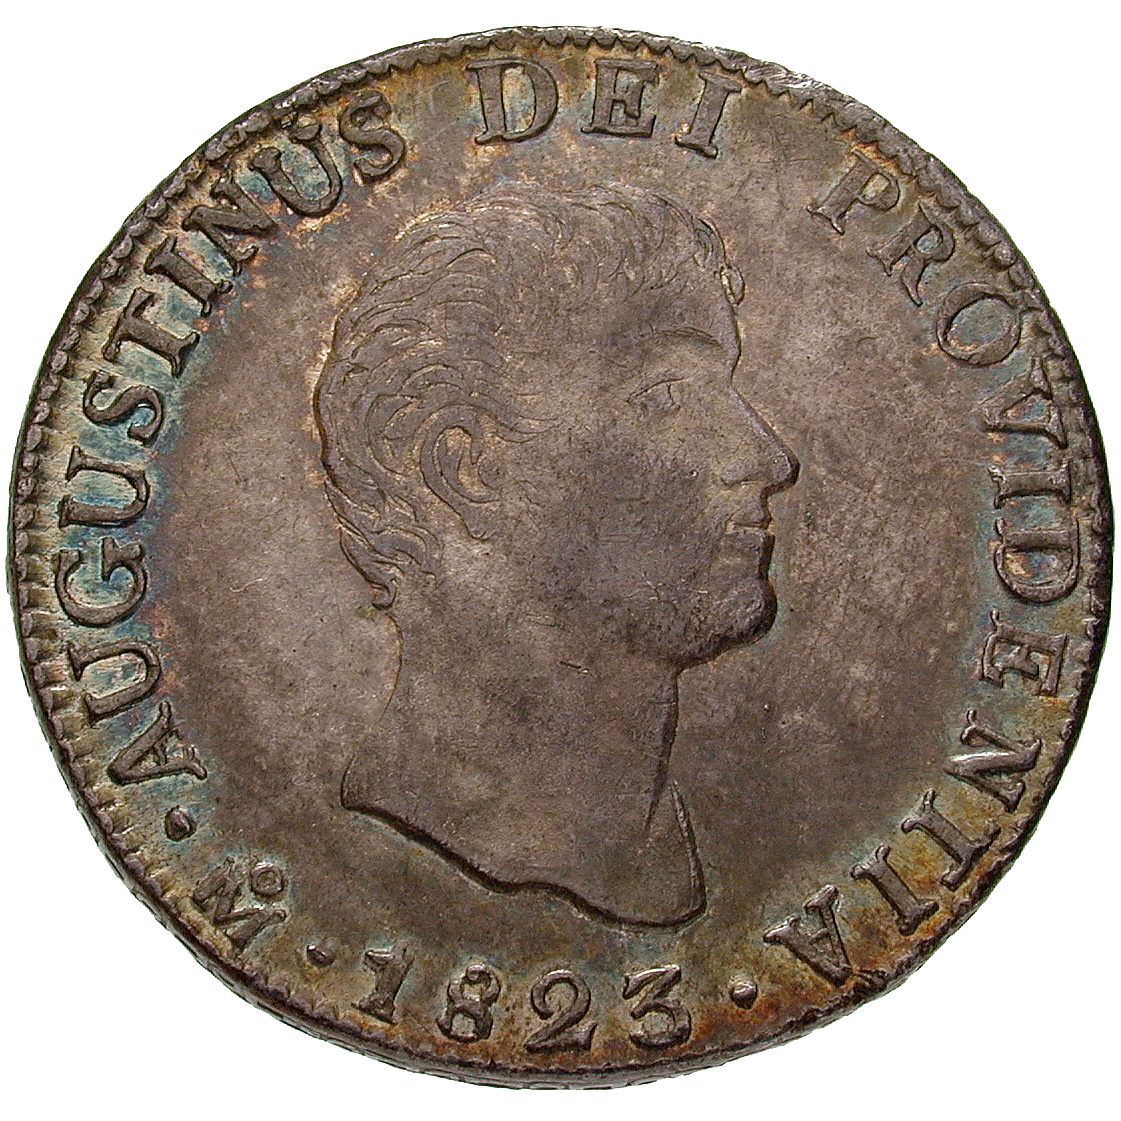 Empire of Mexico, Augustín I, Real de a ocho (Peso) 1823 (obverse)